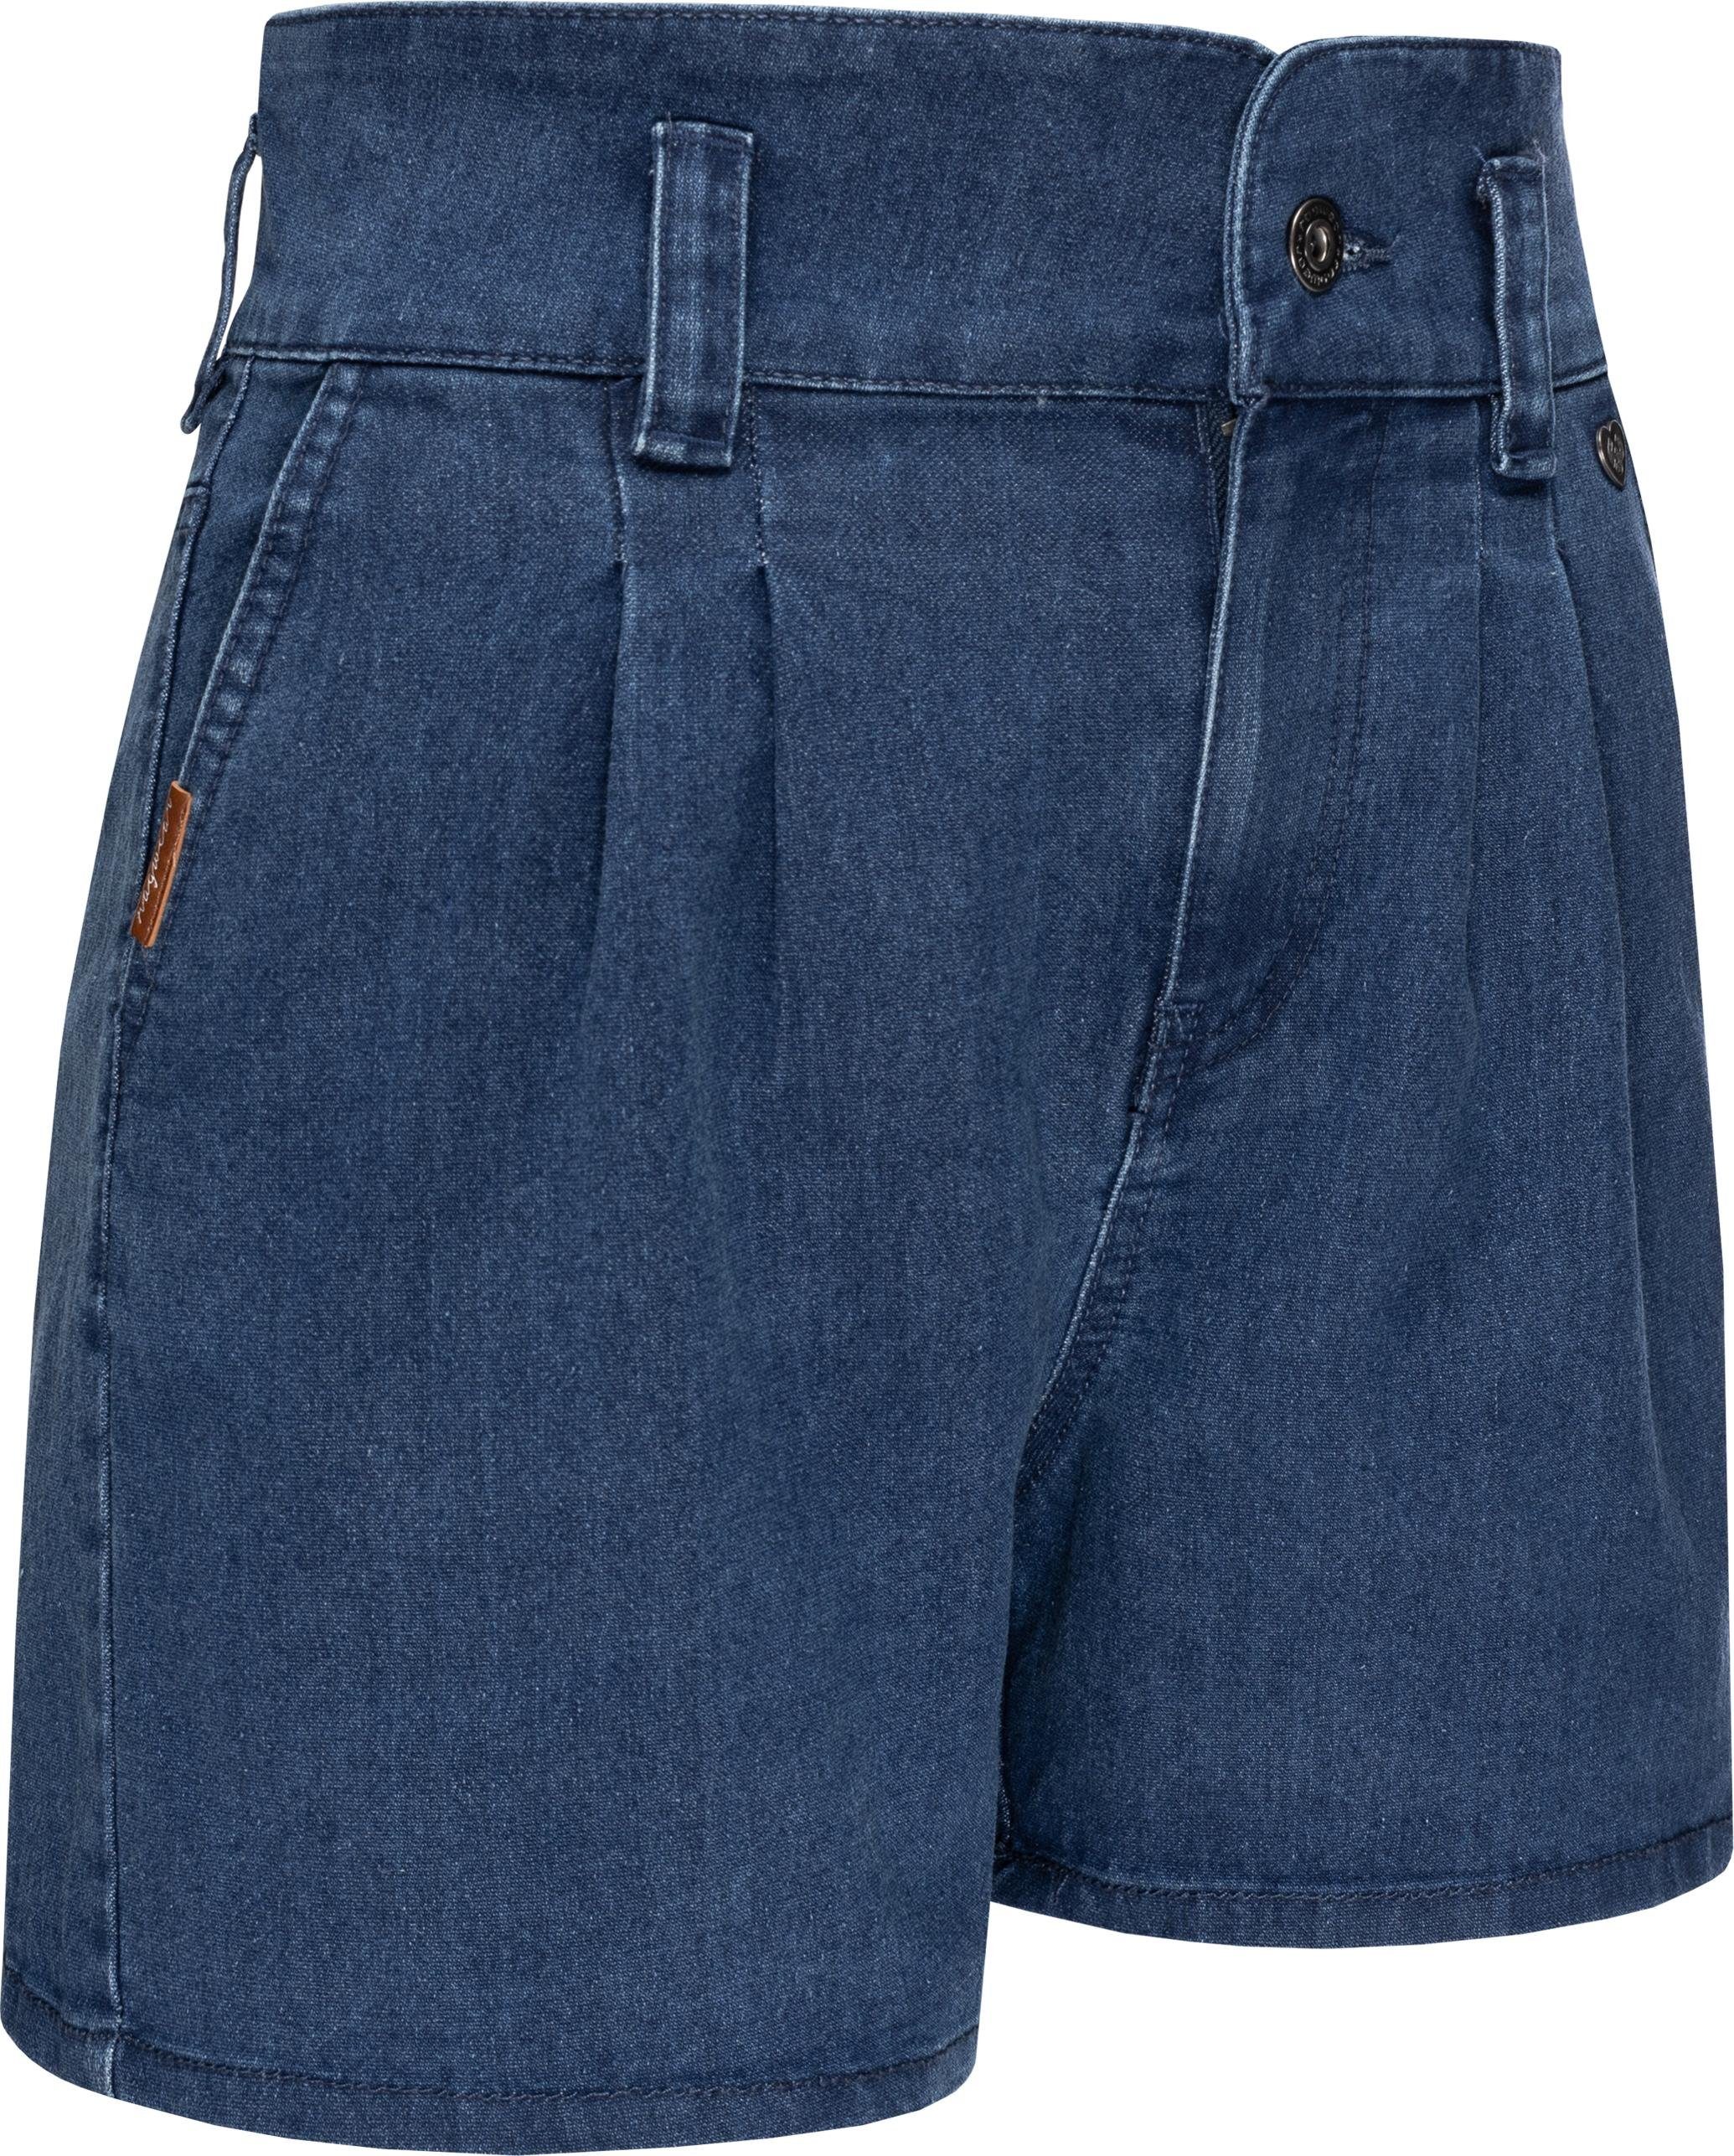 Ragwear Shorts Suzzie stylische, kurze Sommerhose in Jeansoptik indigo